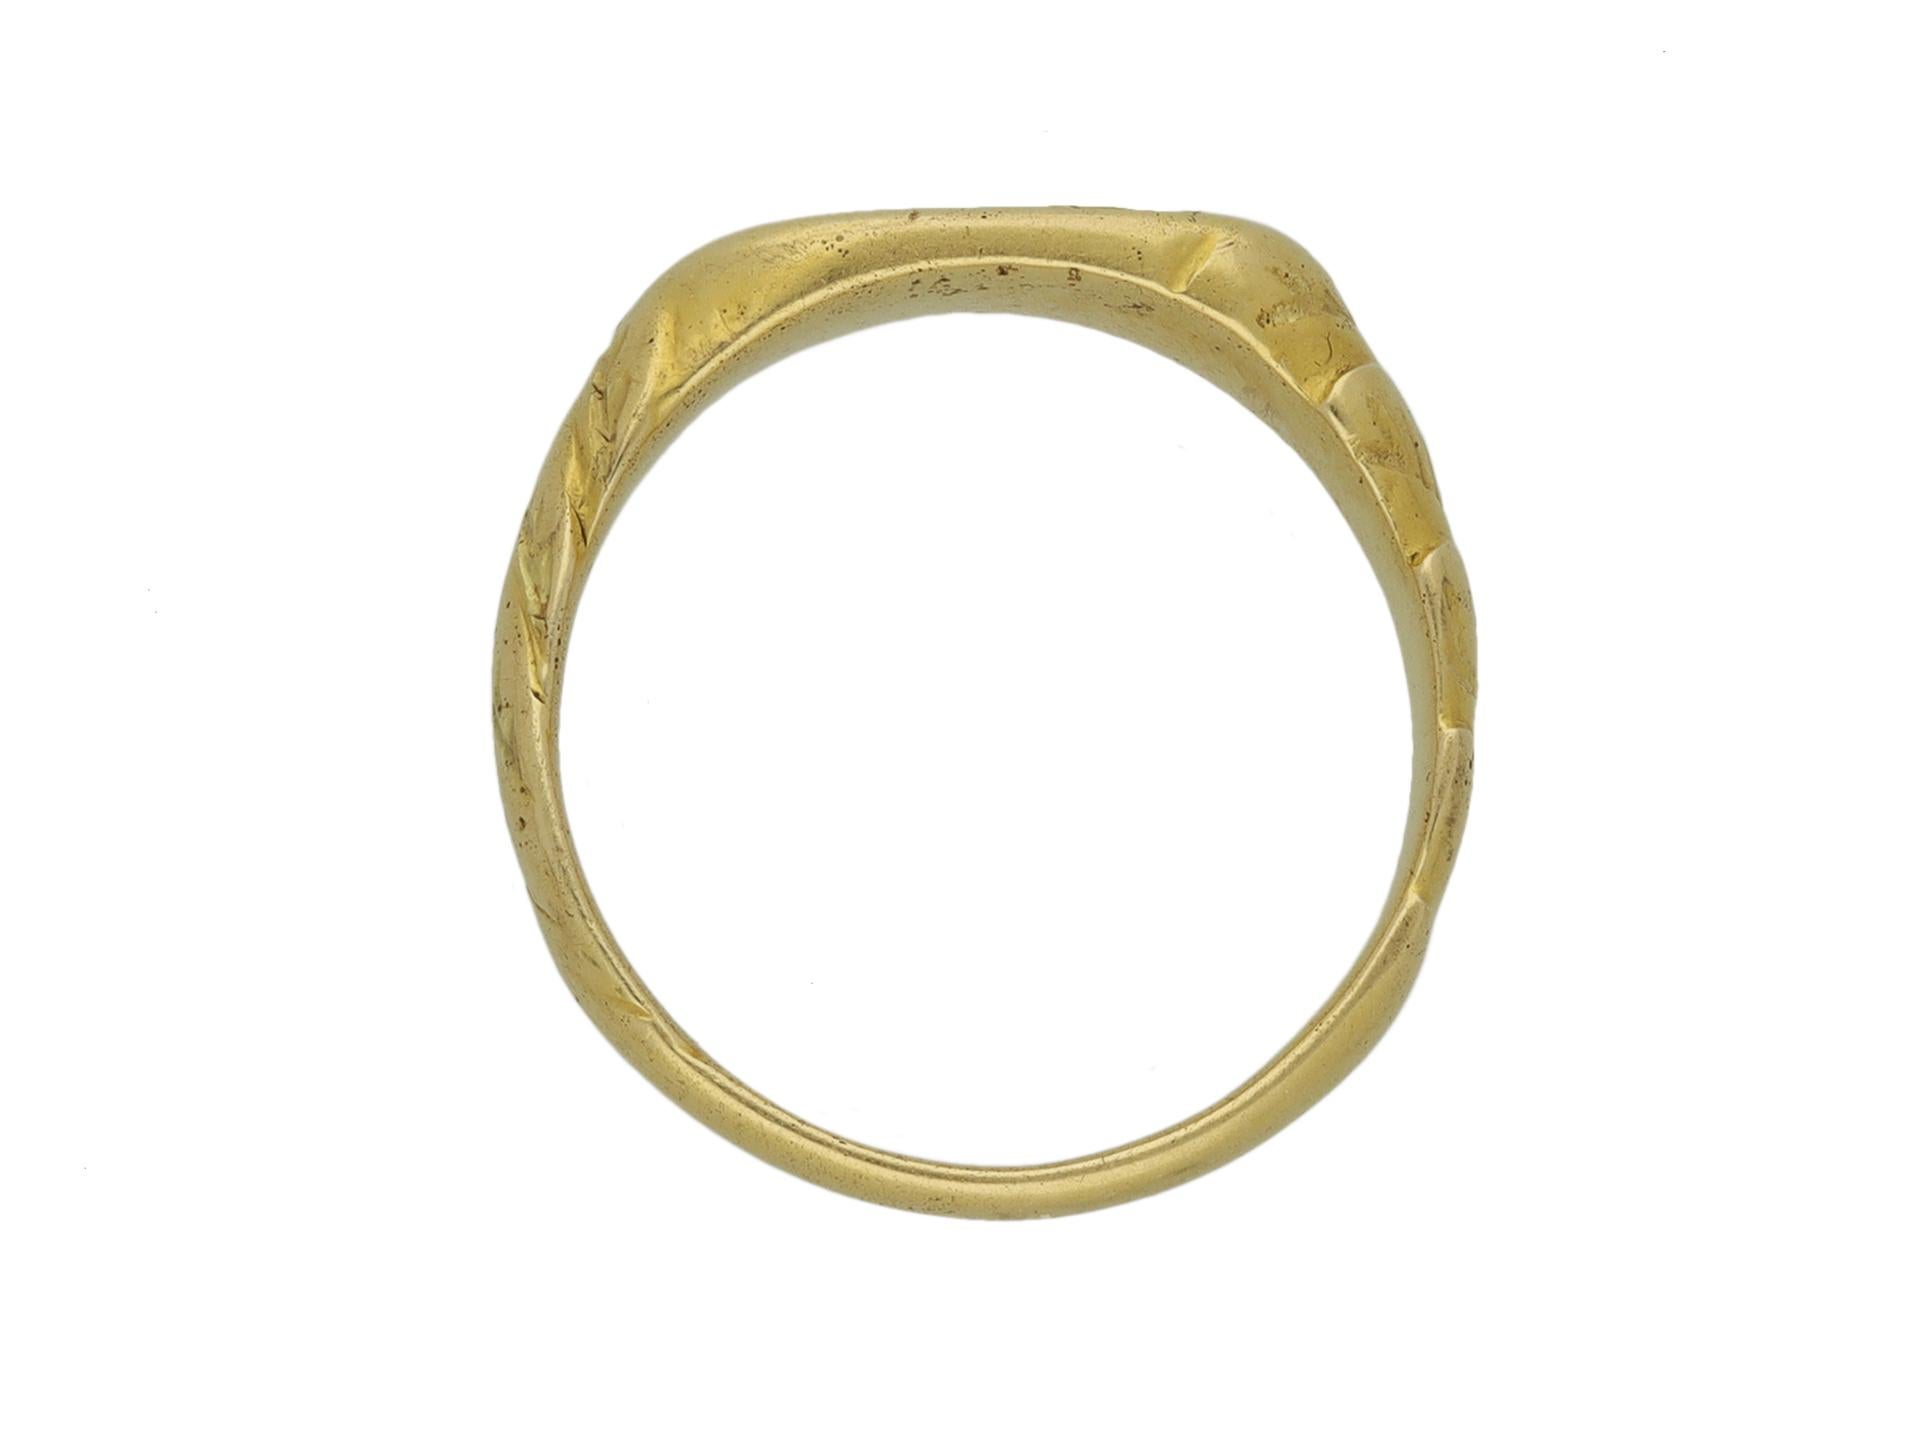 medieval signet ring